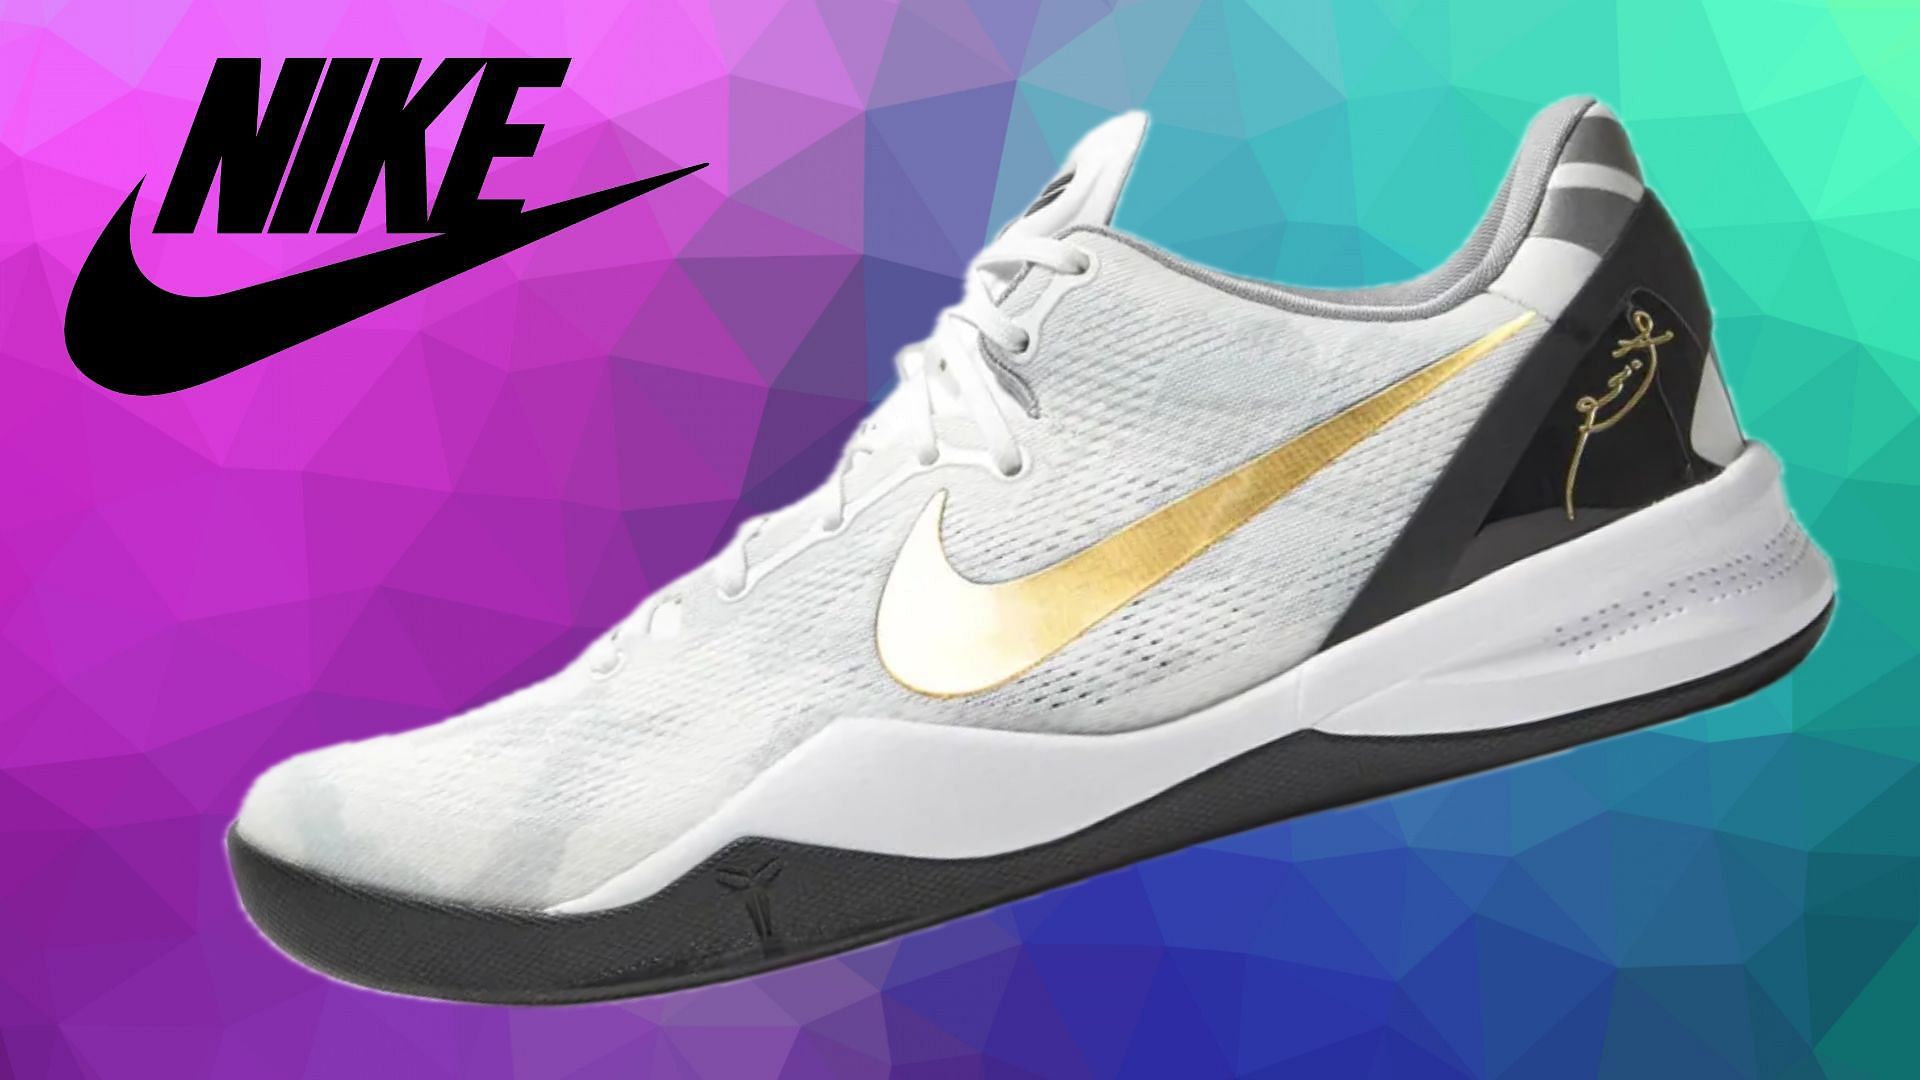 Nike Kobe 8 Protro shoes (Image via House of Heat)